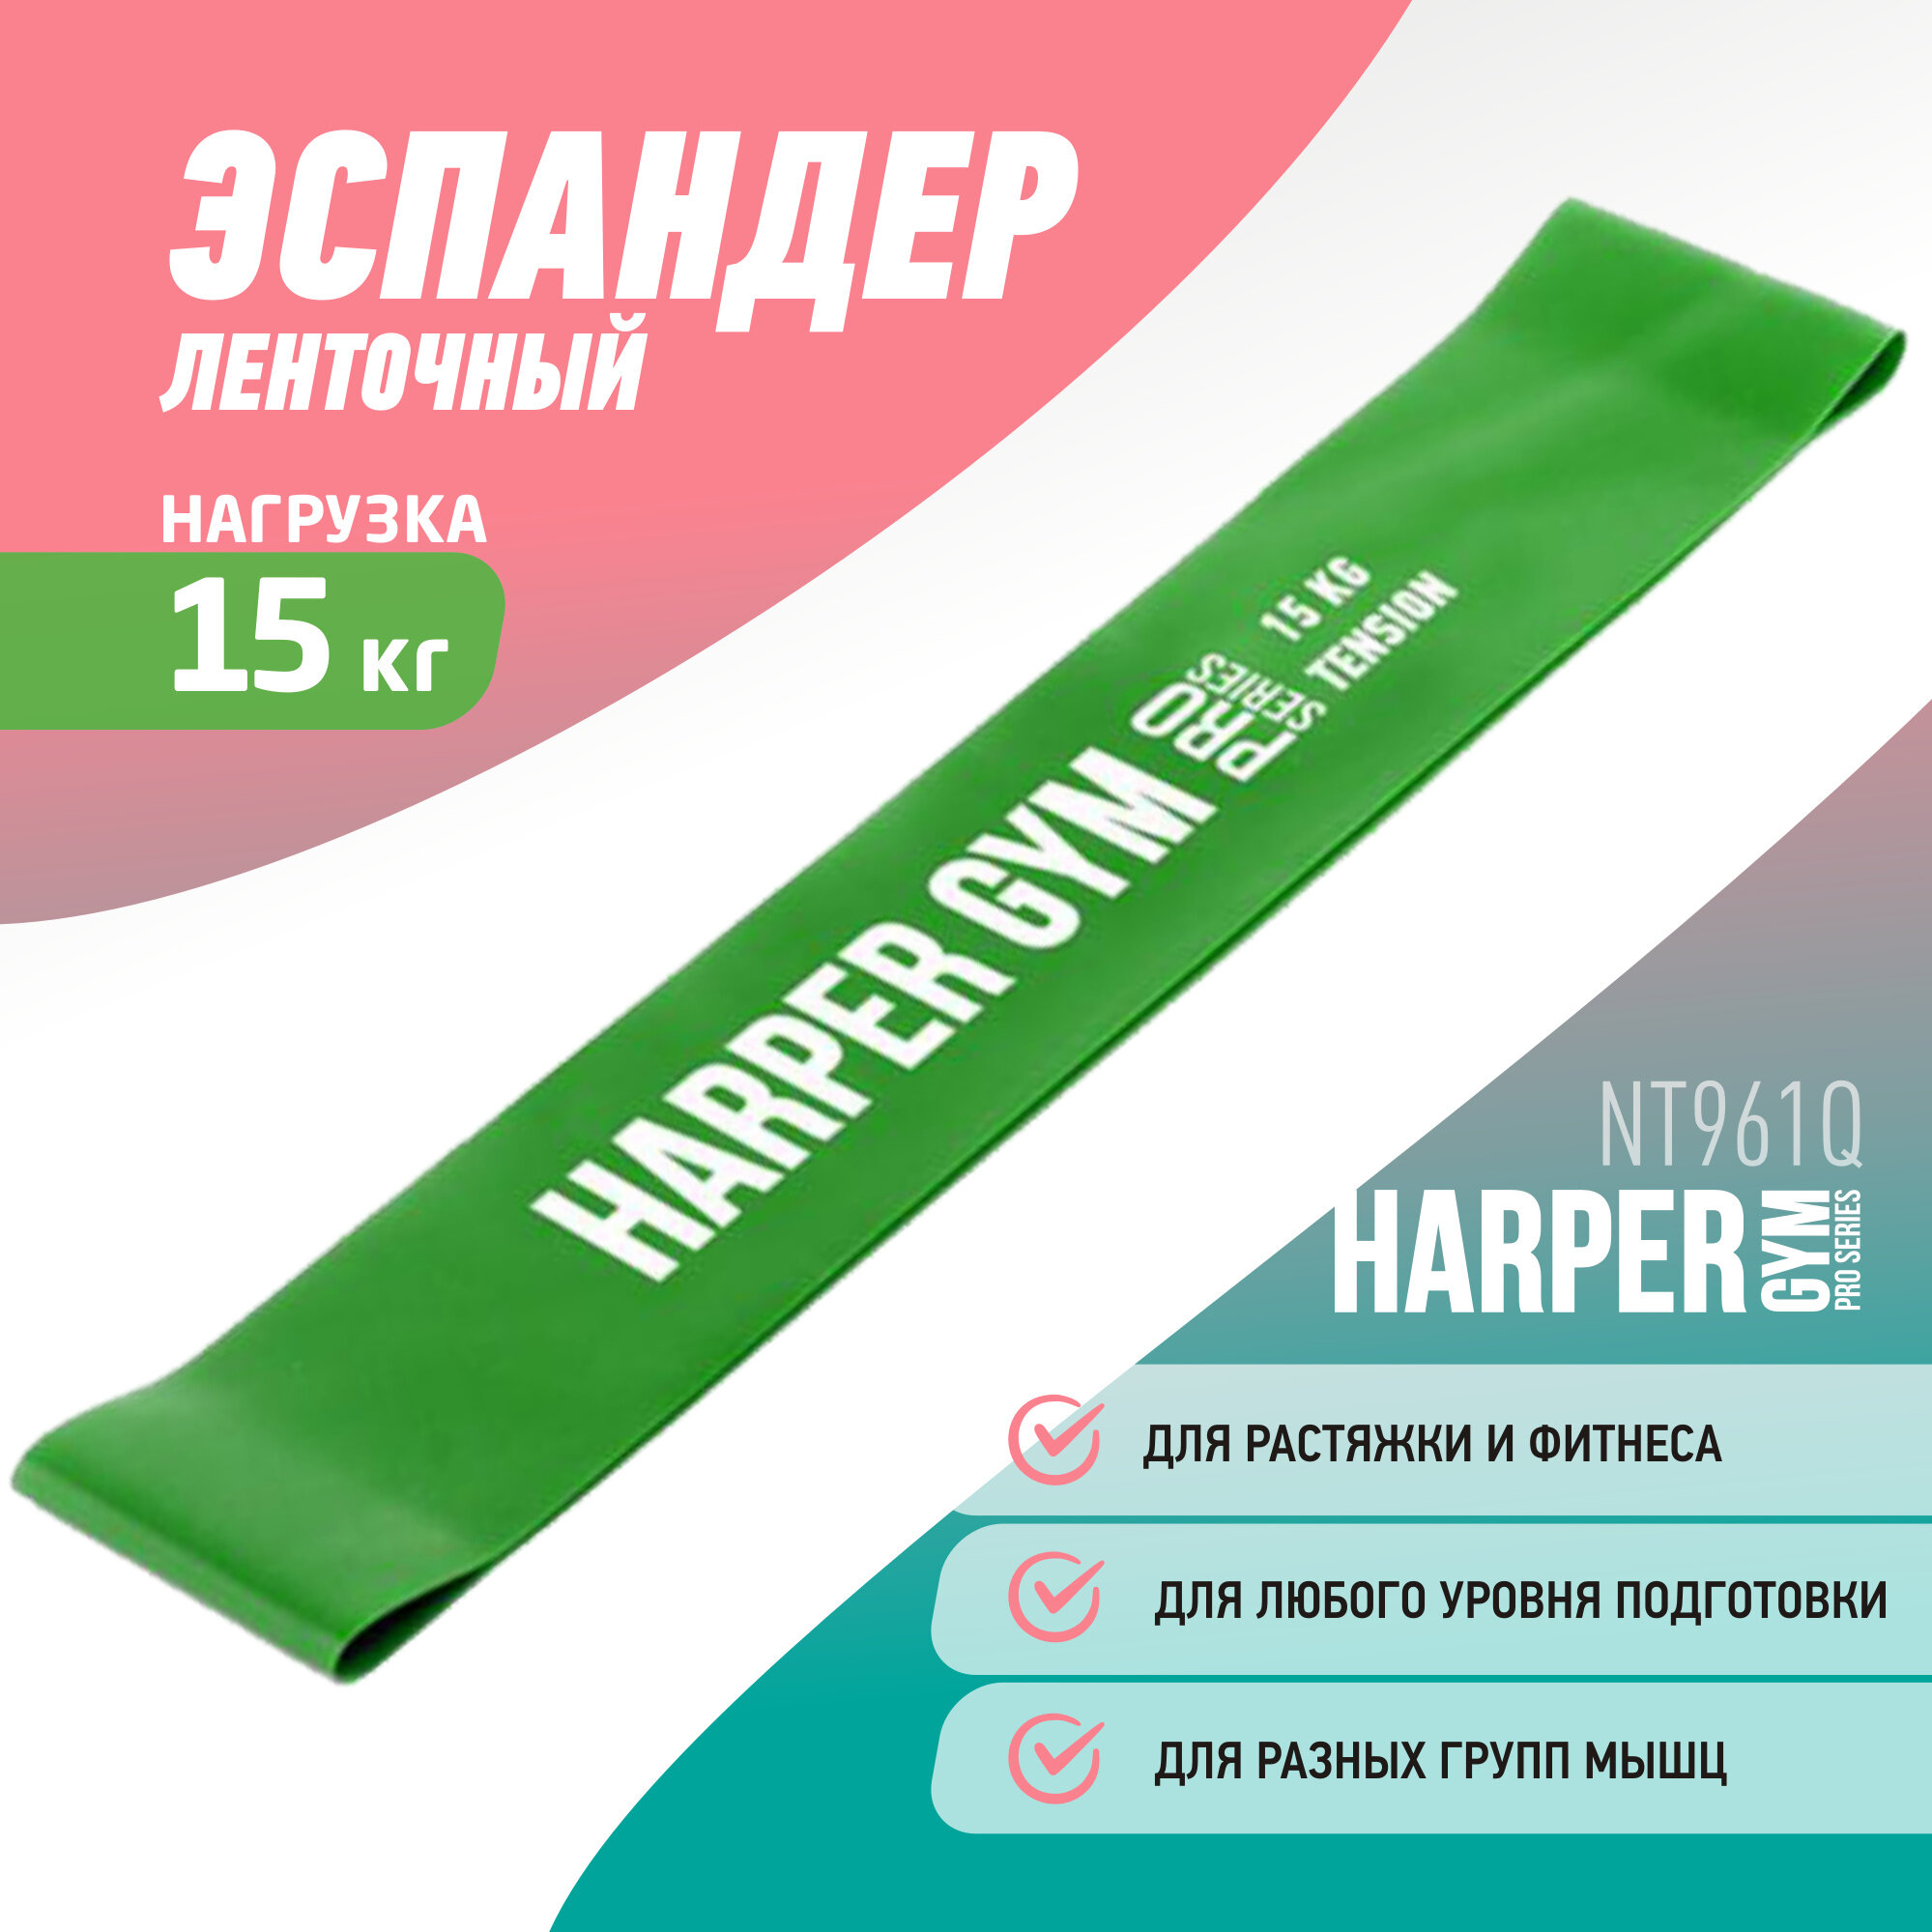 Резинка для фитнеса Harper Gym замкнутый NT961Q (15) 25 х 5 см 15 кг зеленый